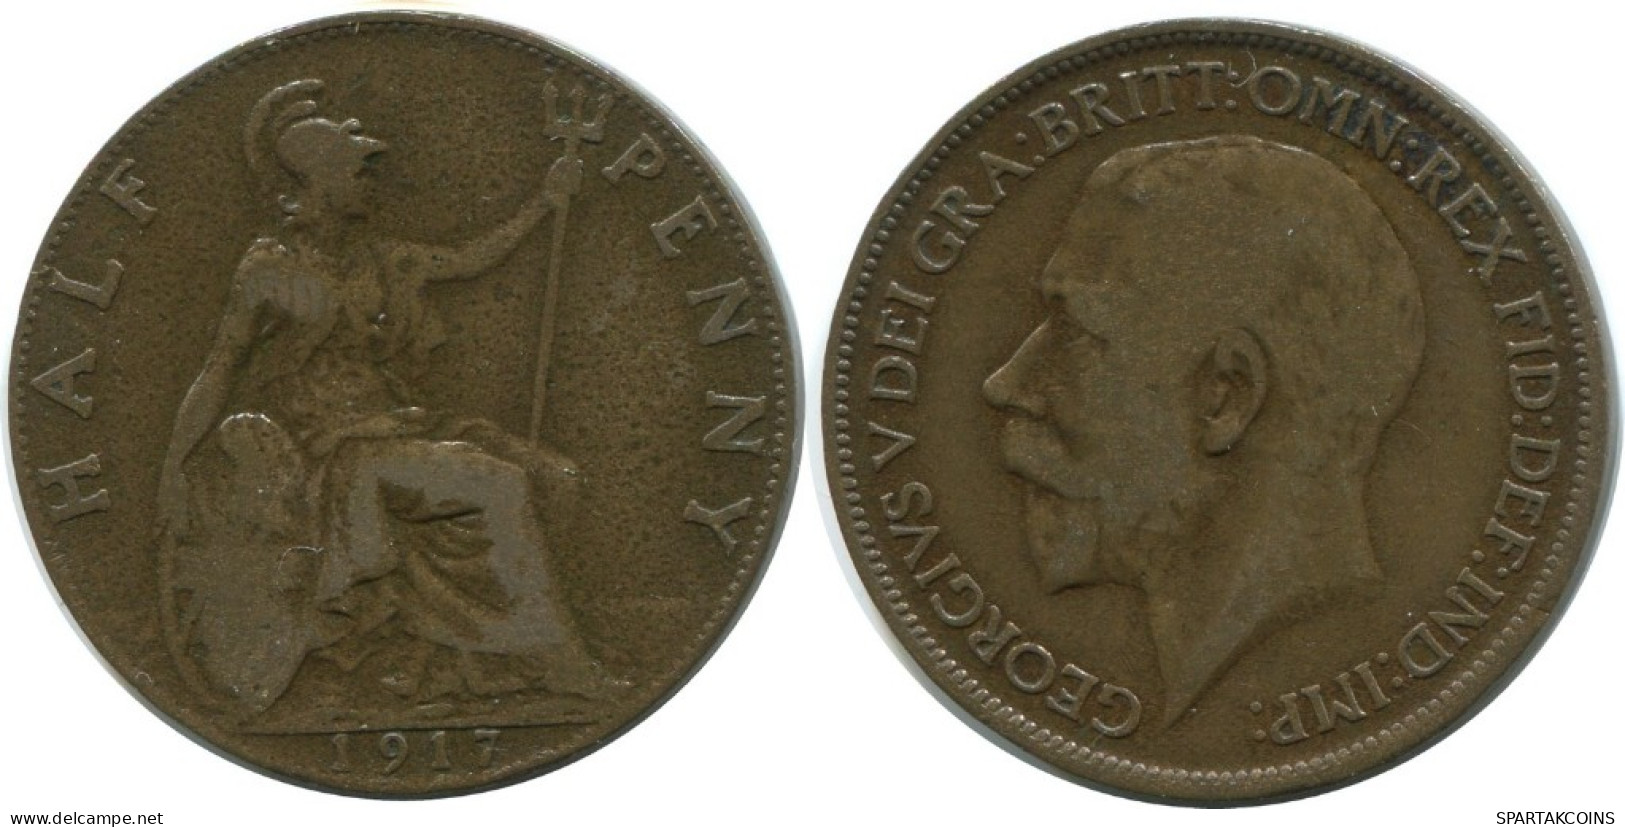 HALF PENNY 1917 UK GROßBRITANNIEN GREAT BRITAIN Münze #AG795.1.D.A - C. 1/2 Penny